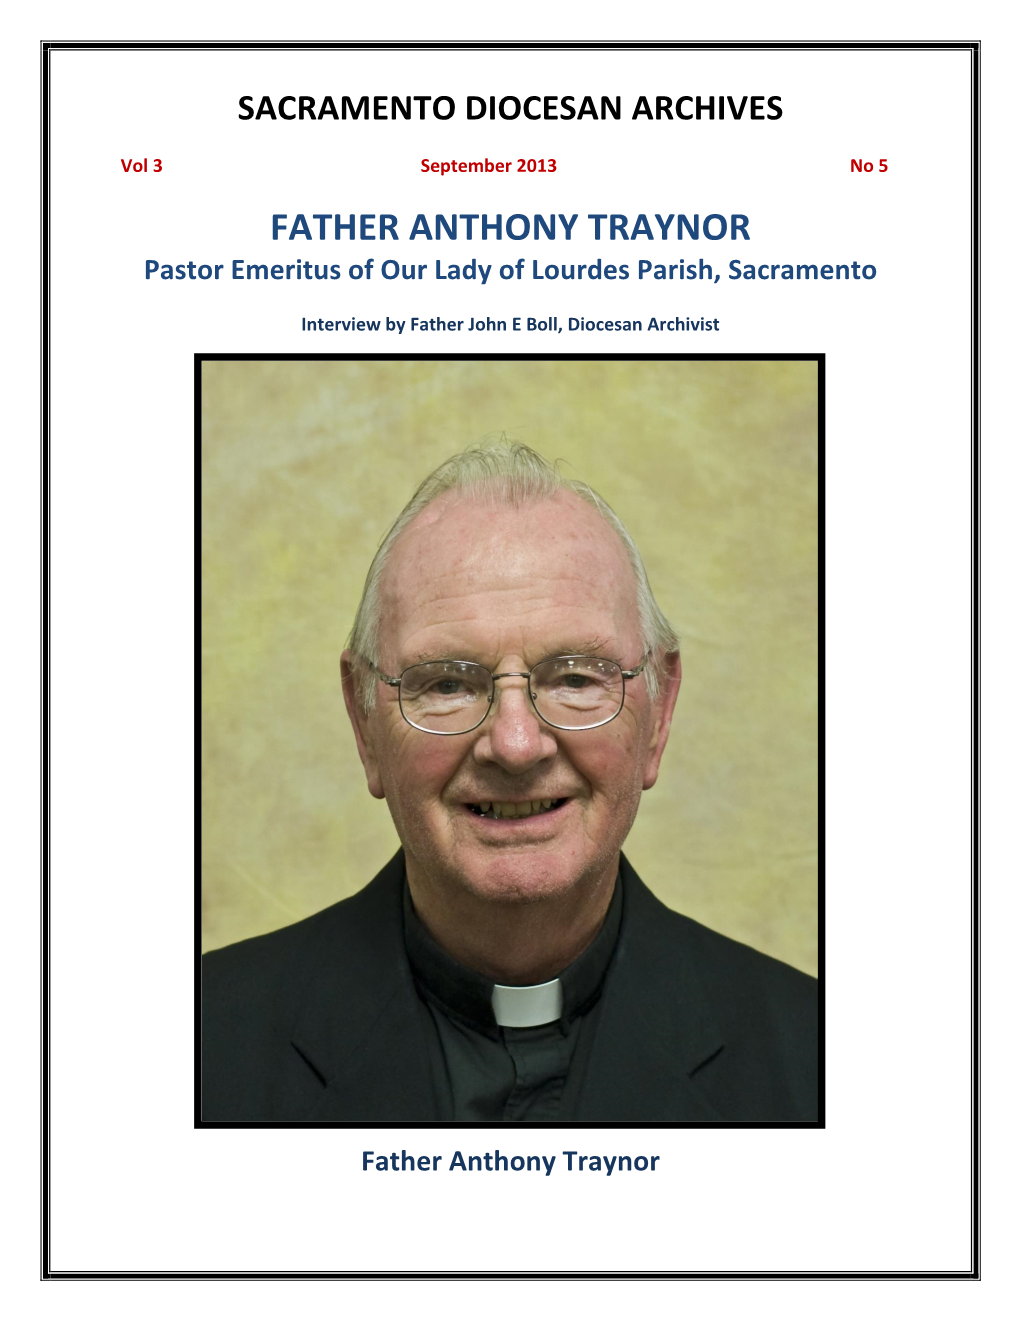 Vol 3, No 5 Fr Anthony Traynor